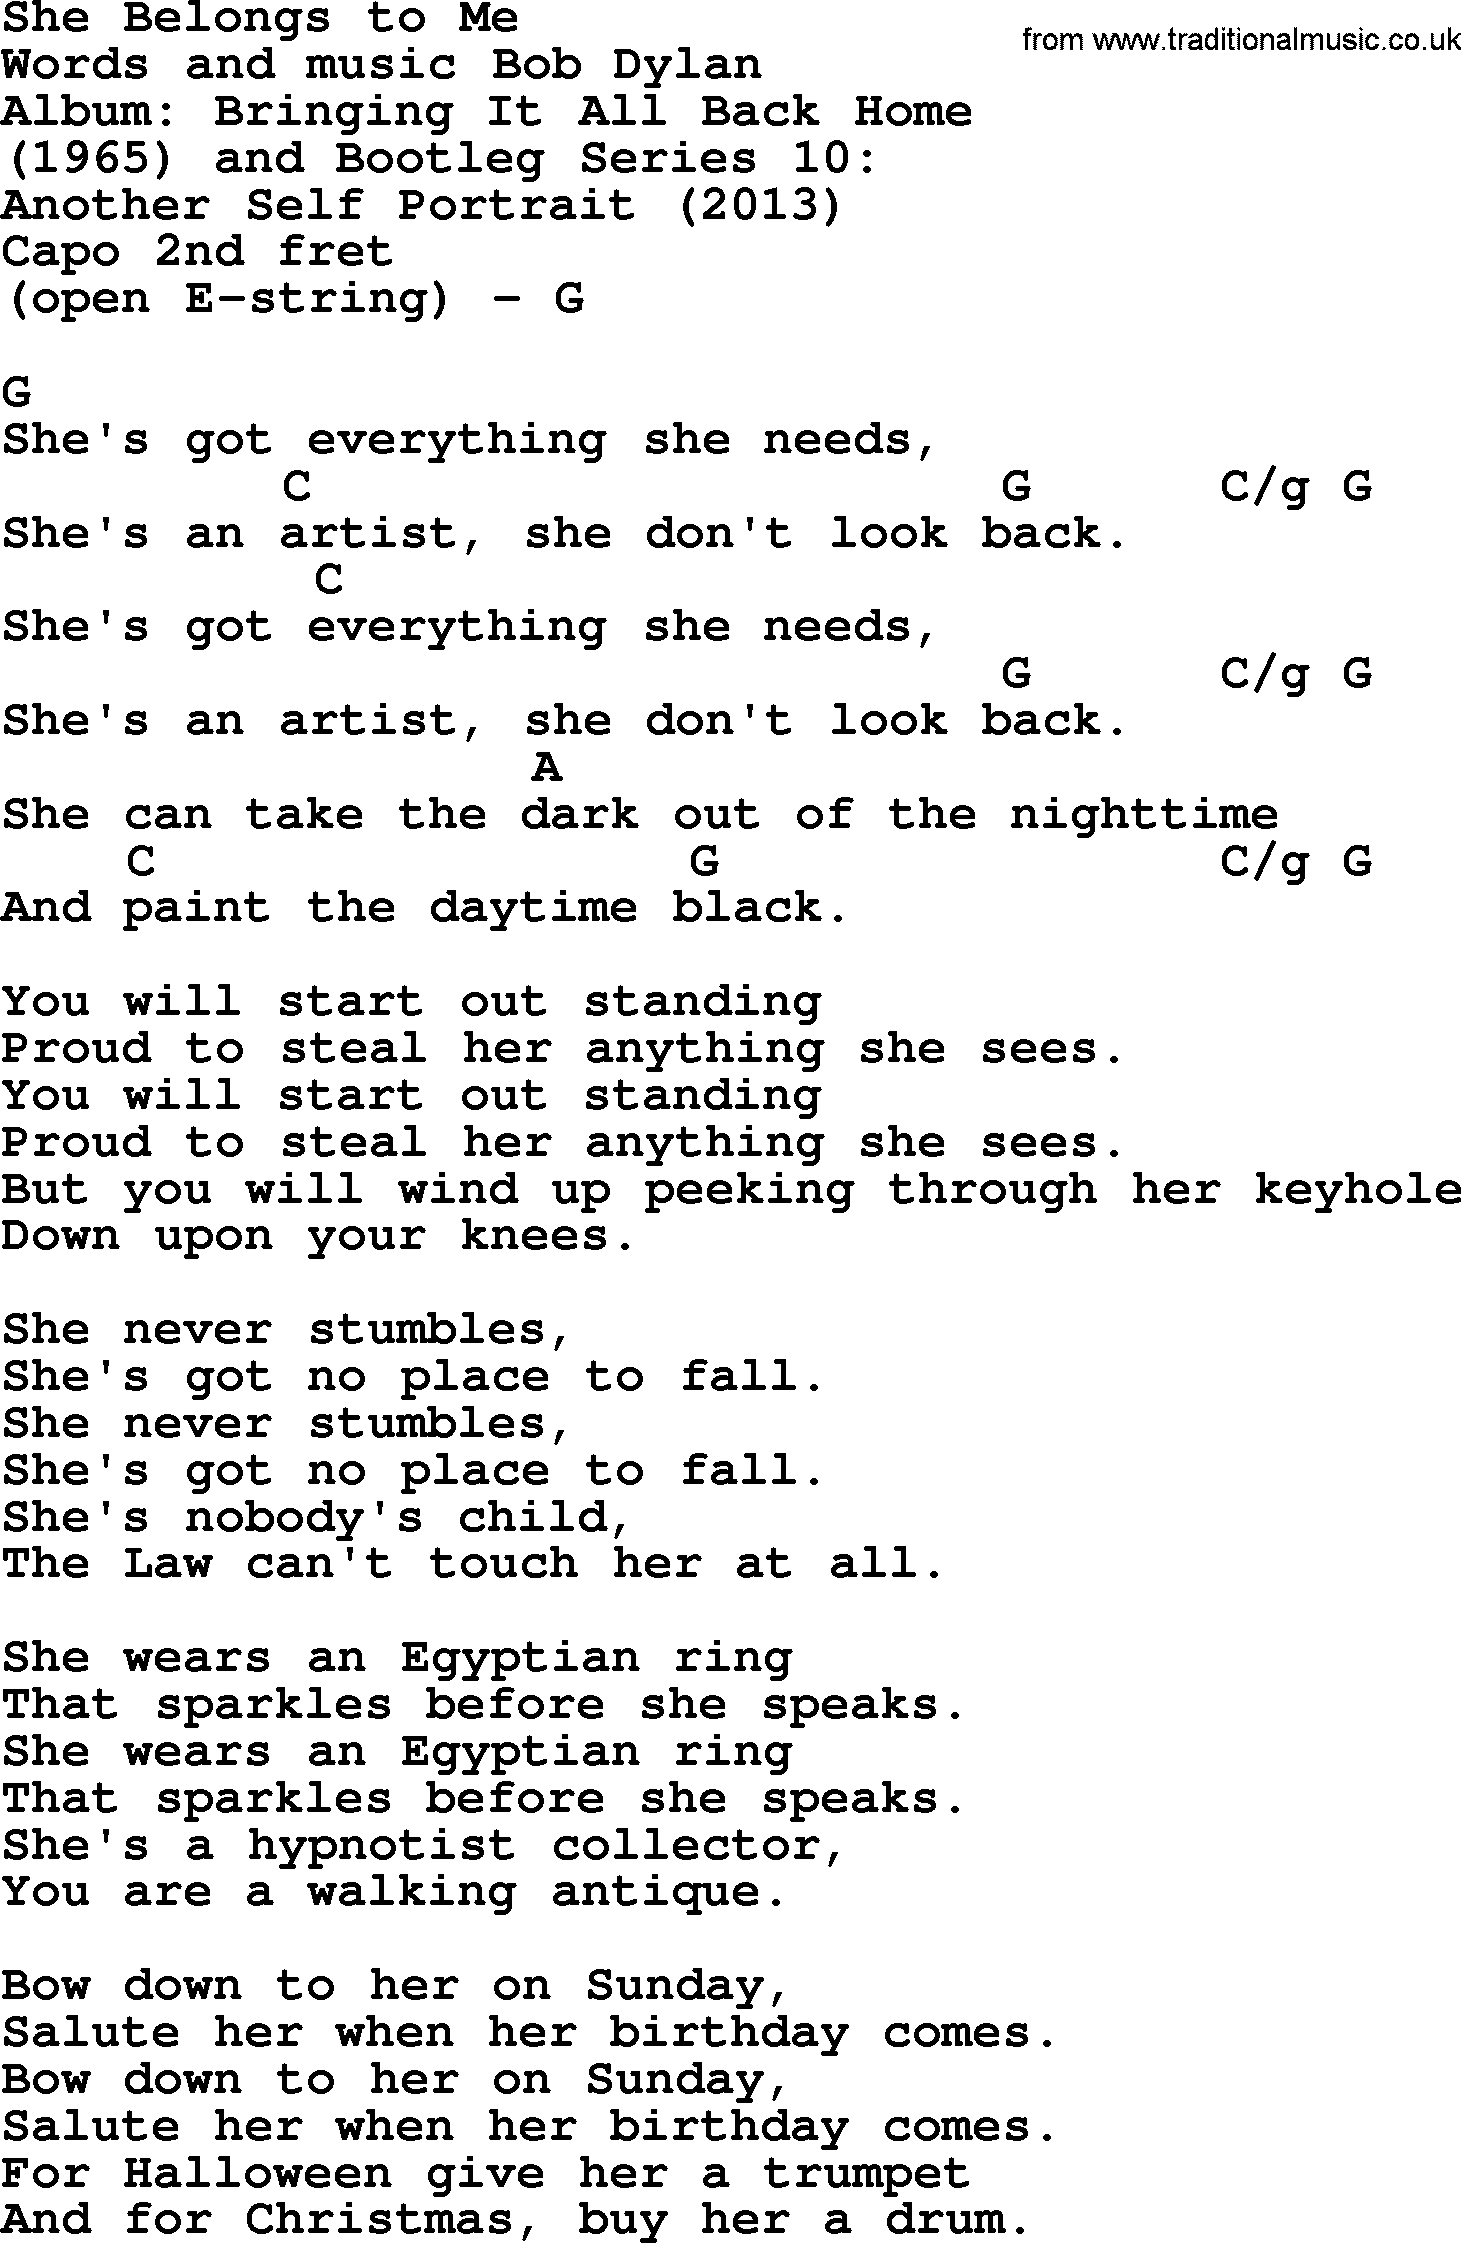 Bob Dylan song, lyrics with chords - She Belongs to Me